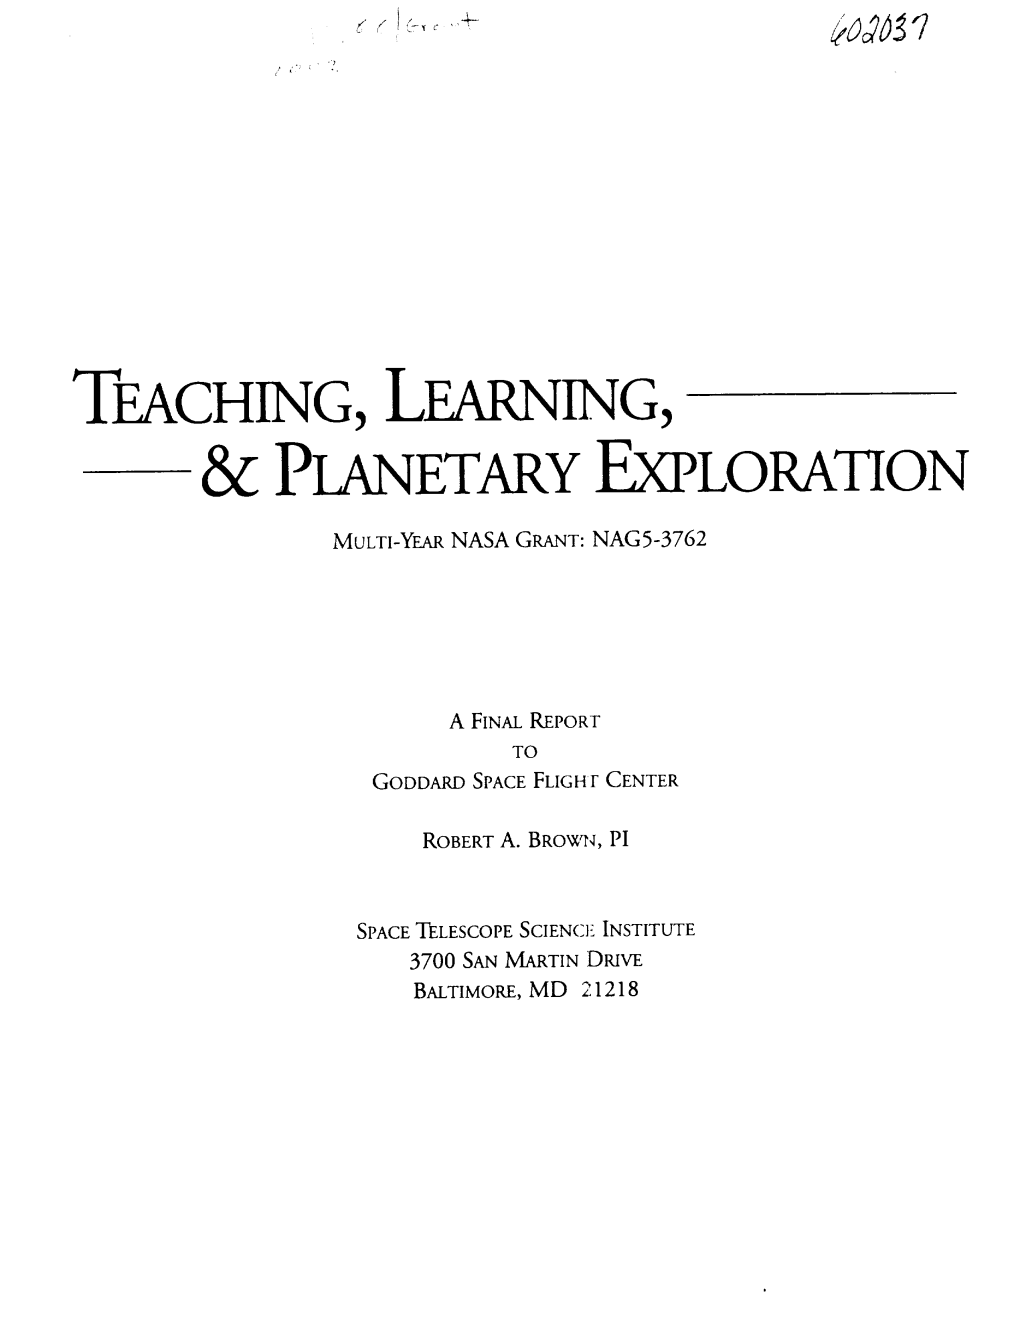 Teaching, Learning, & Planetary Exploration